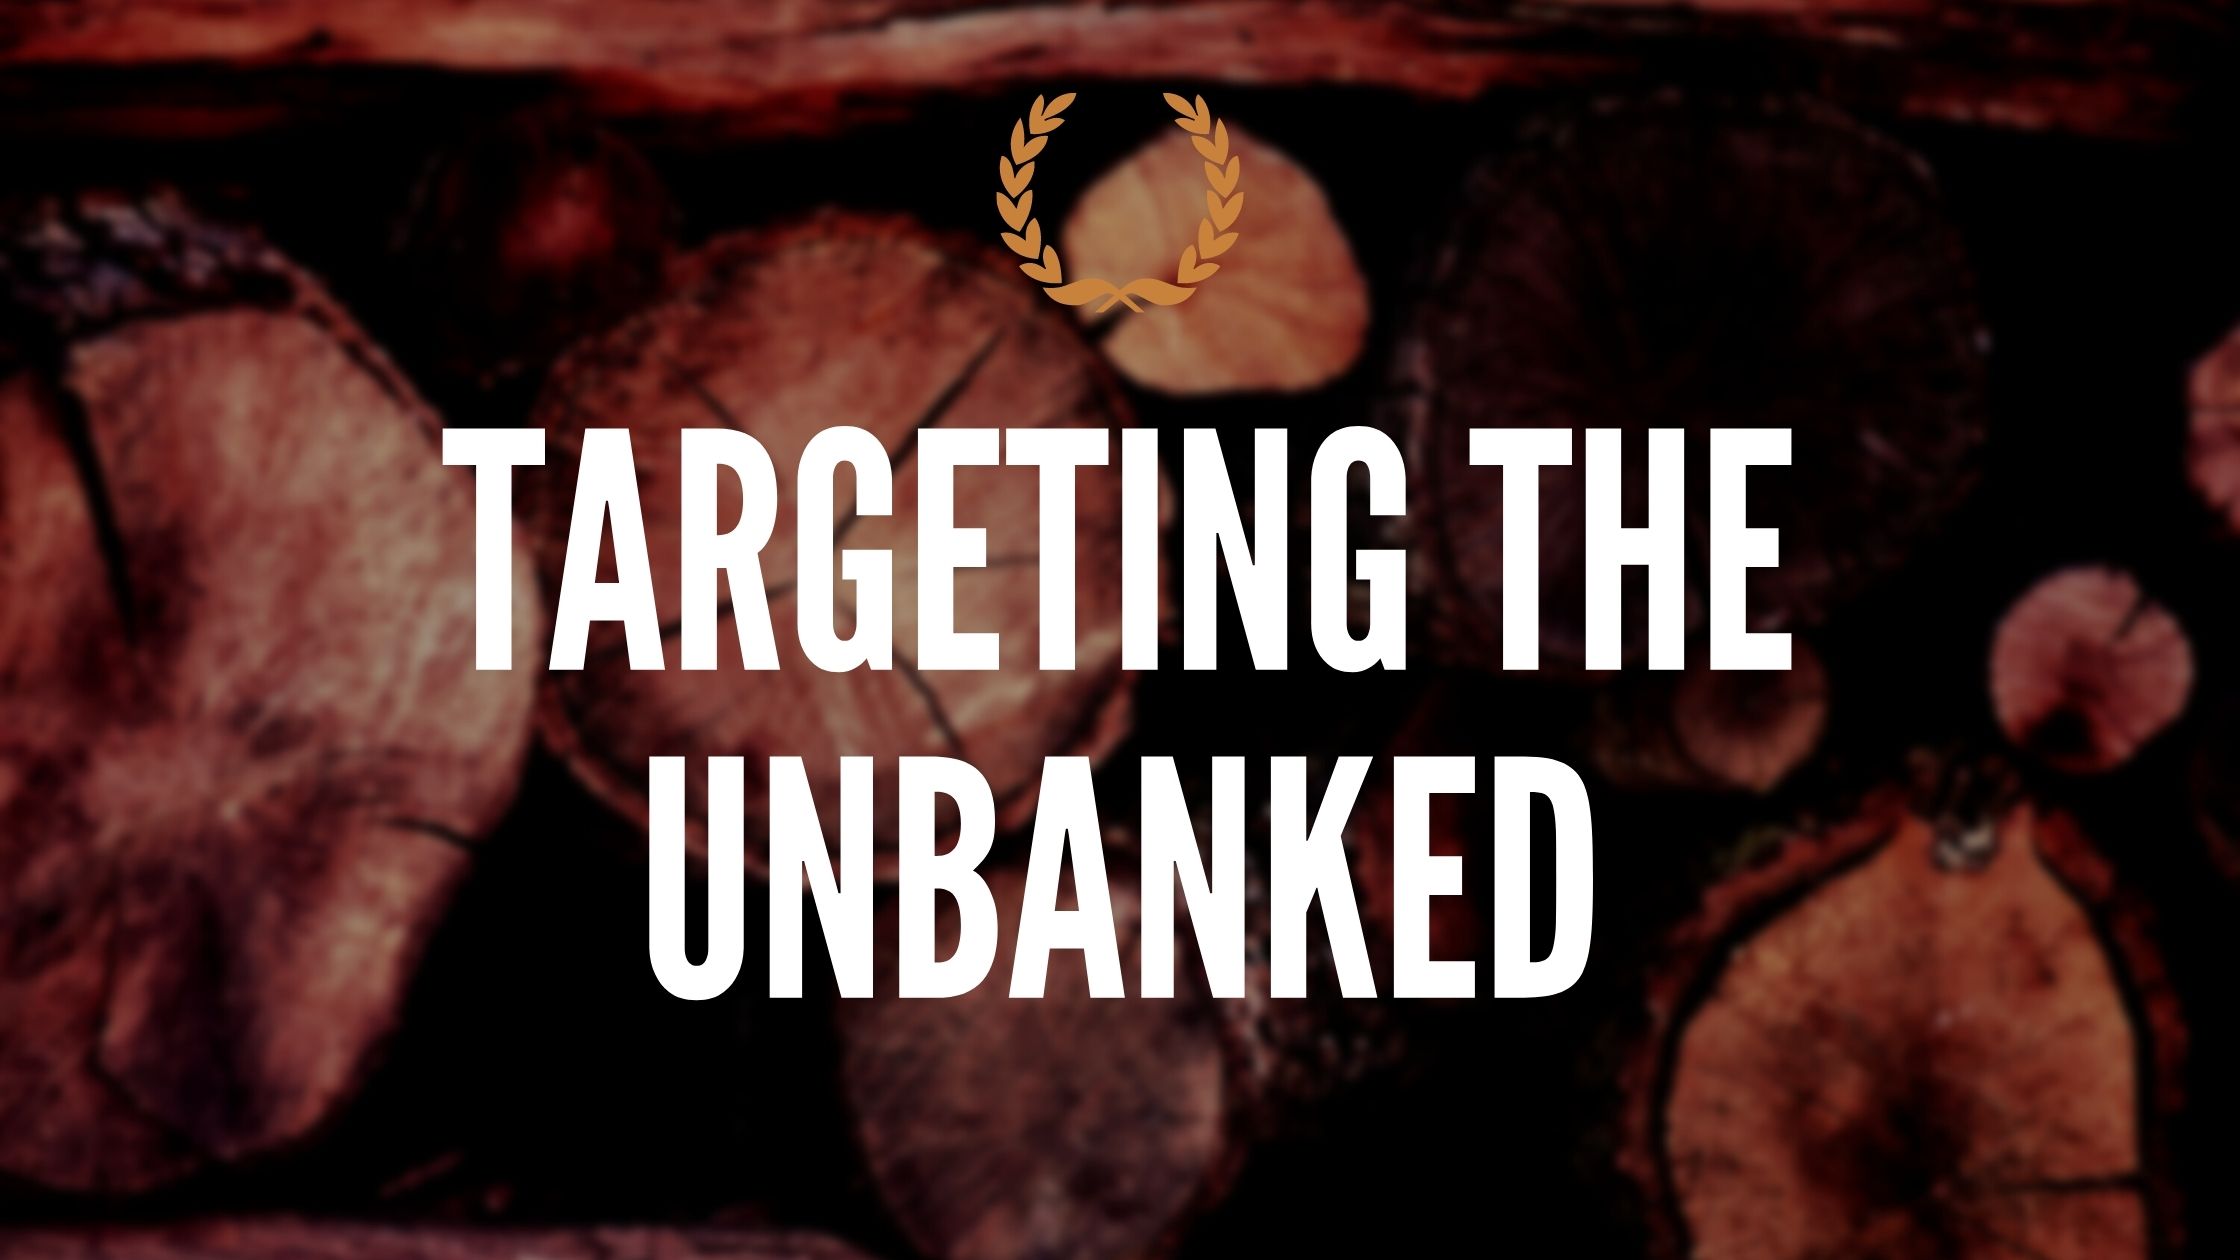 Targeting the unbanked